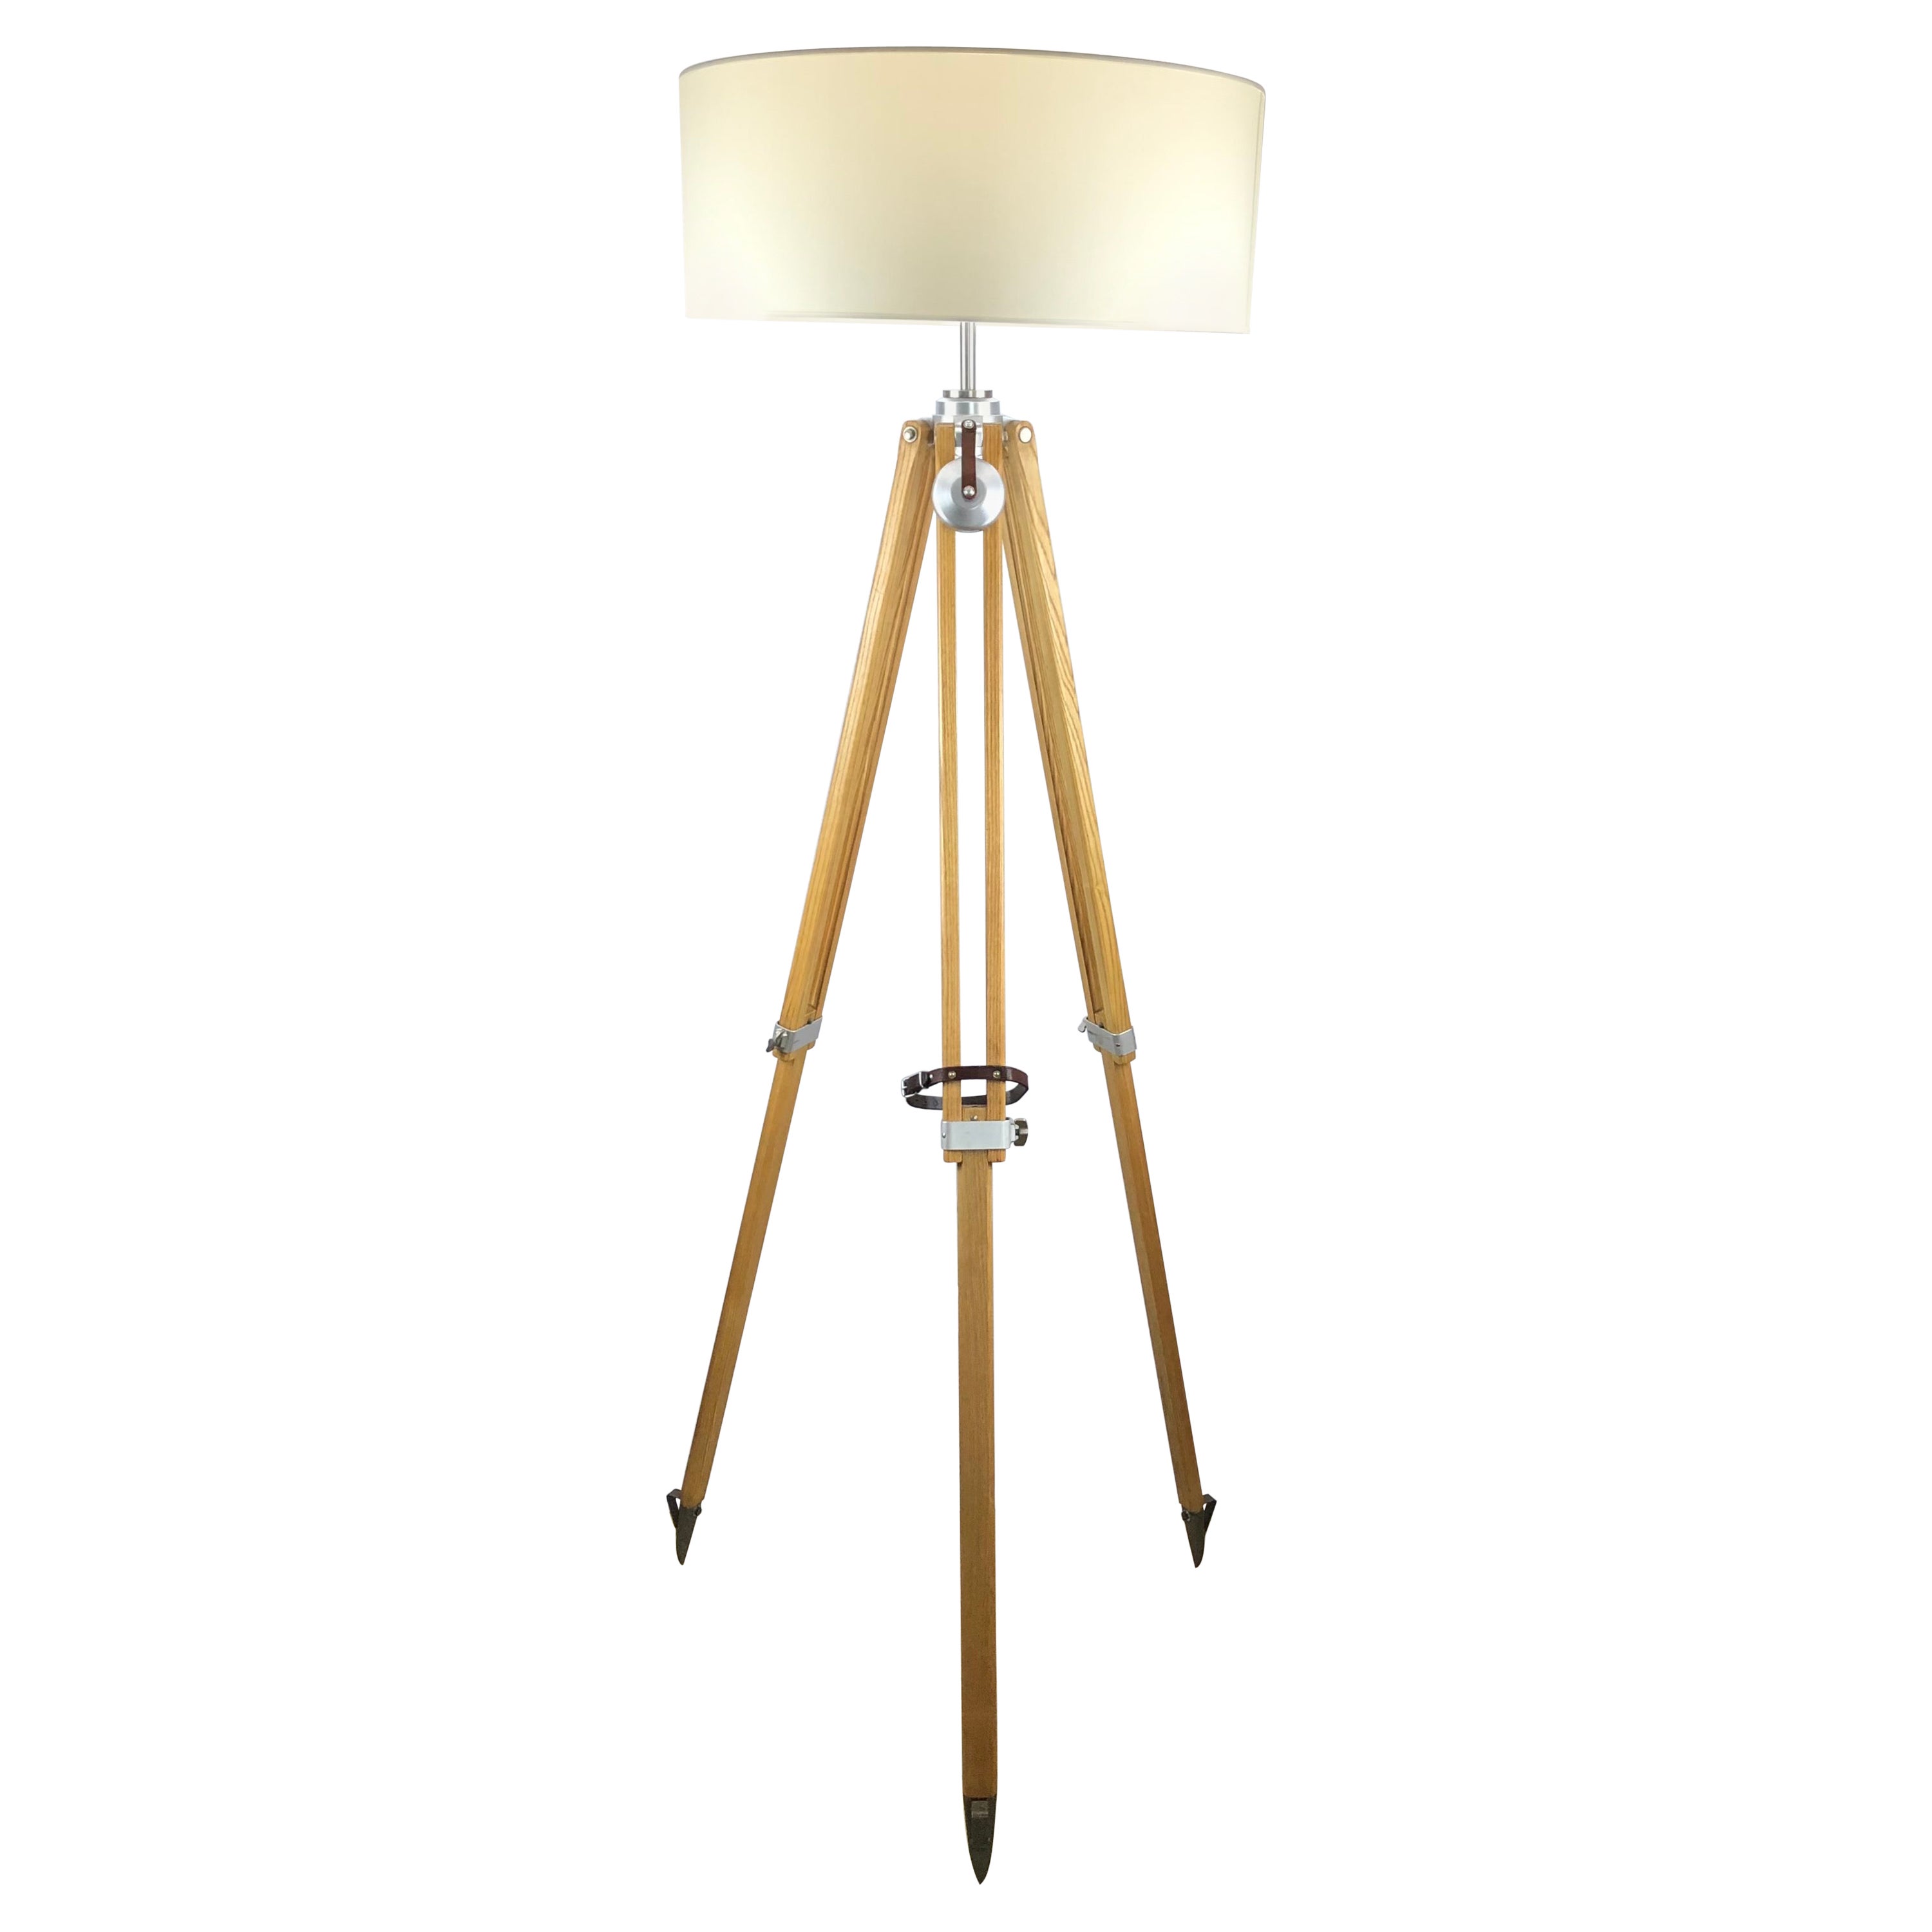 Adjustable Wooden Tripod Floor Lamp Natural Finish by Kern Aarau, Switzerland